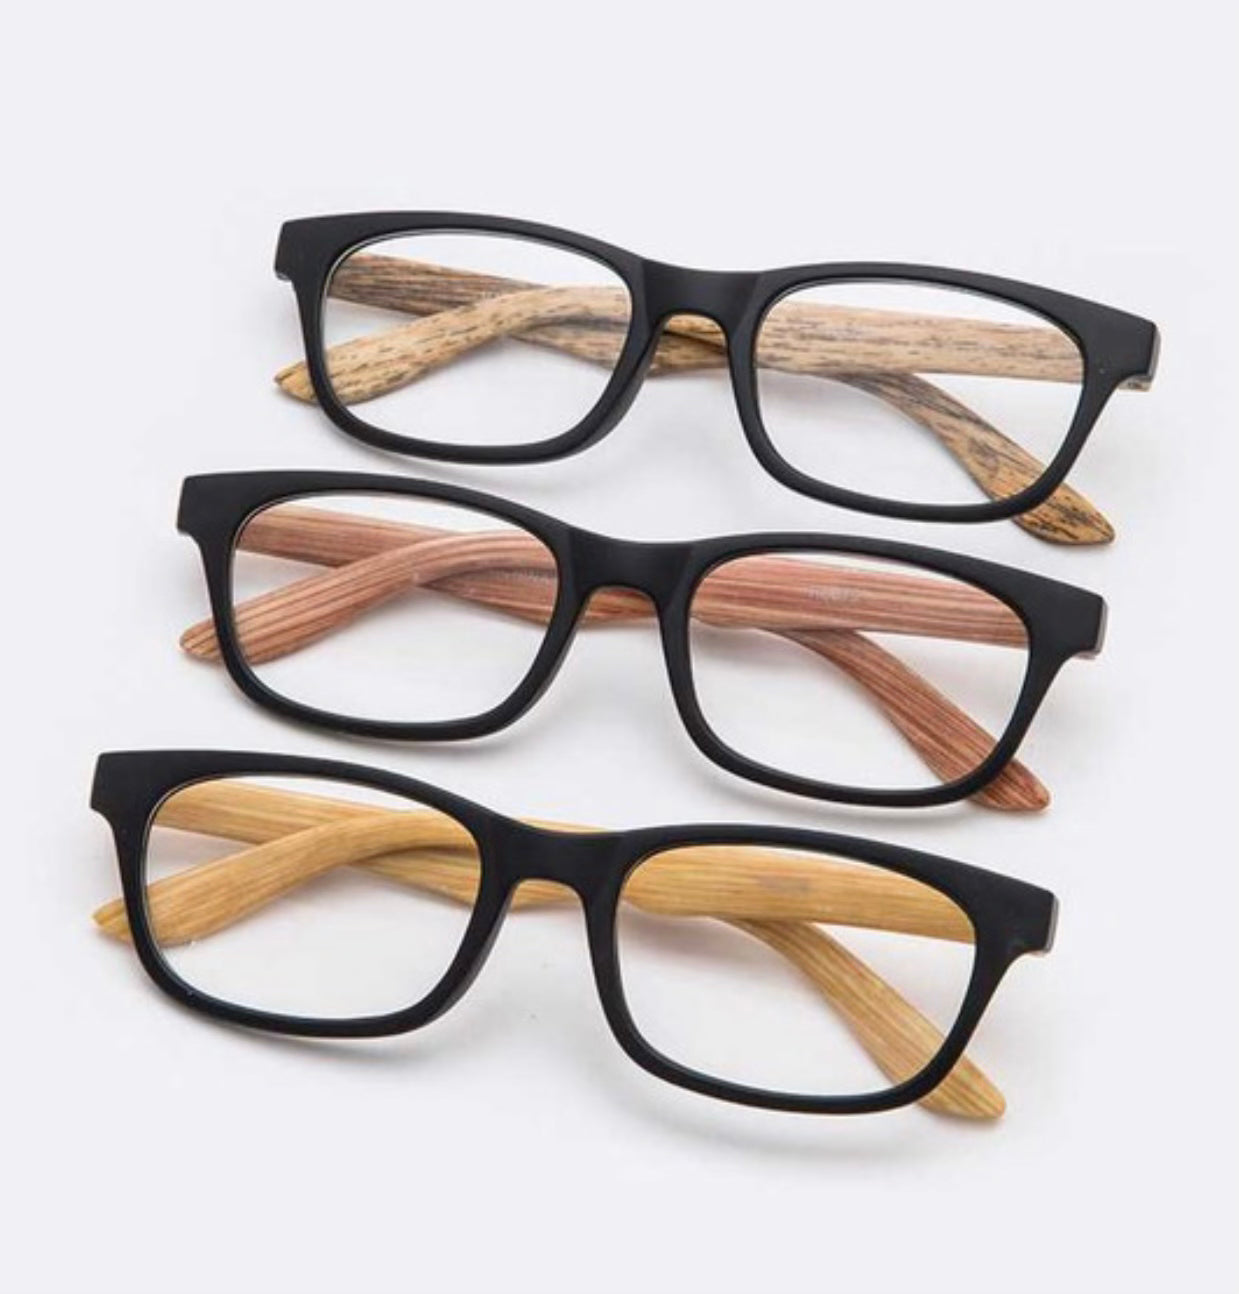 “Cheater” Glasses